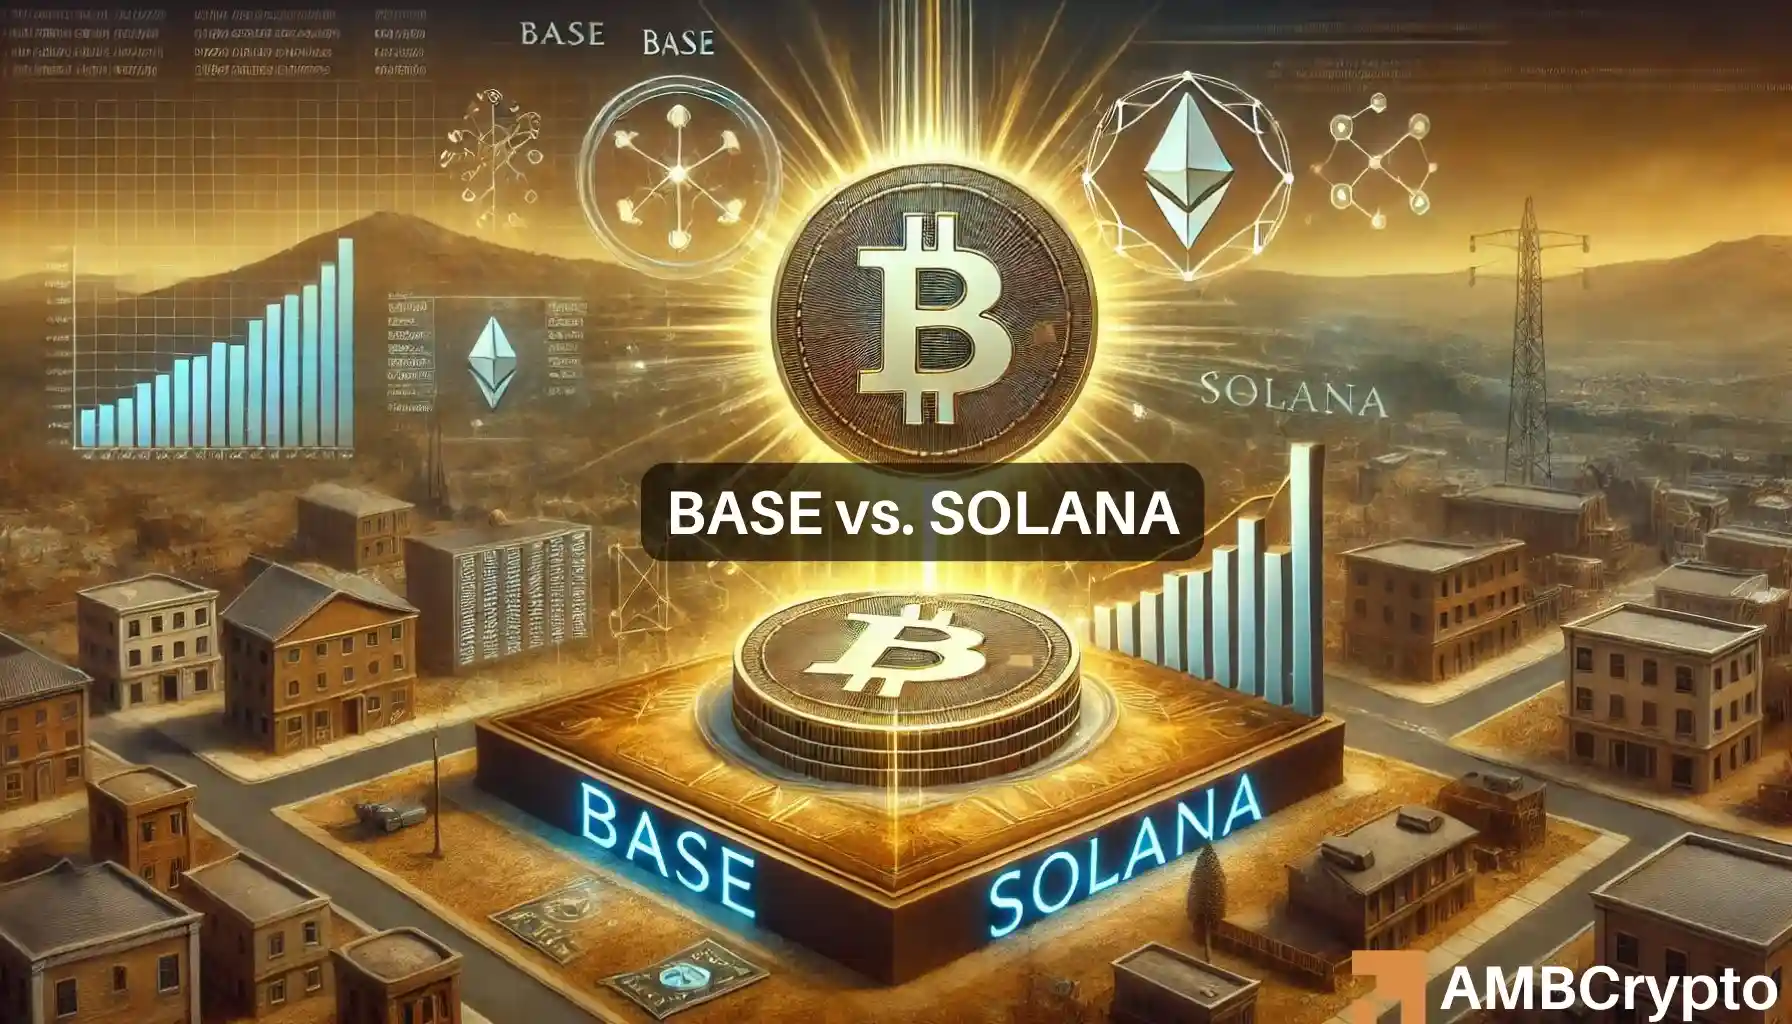 Base chain memecoins surge: Is Solana’s dominance under threat?